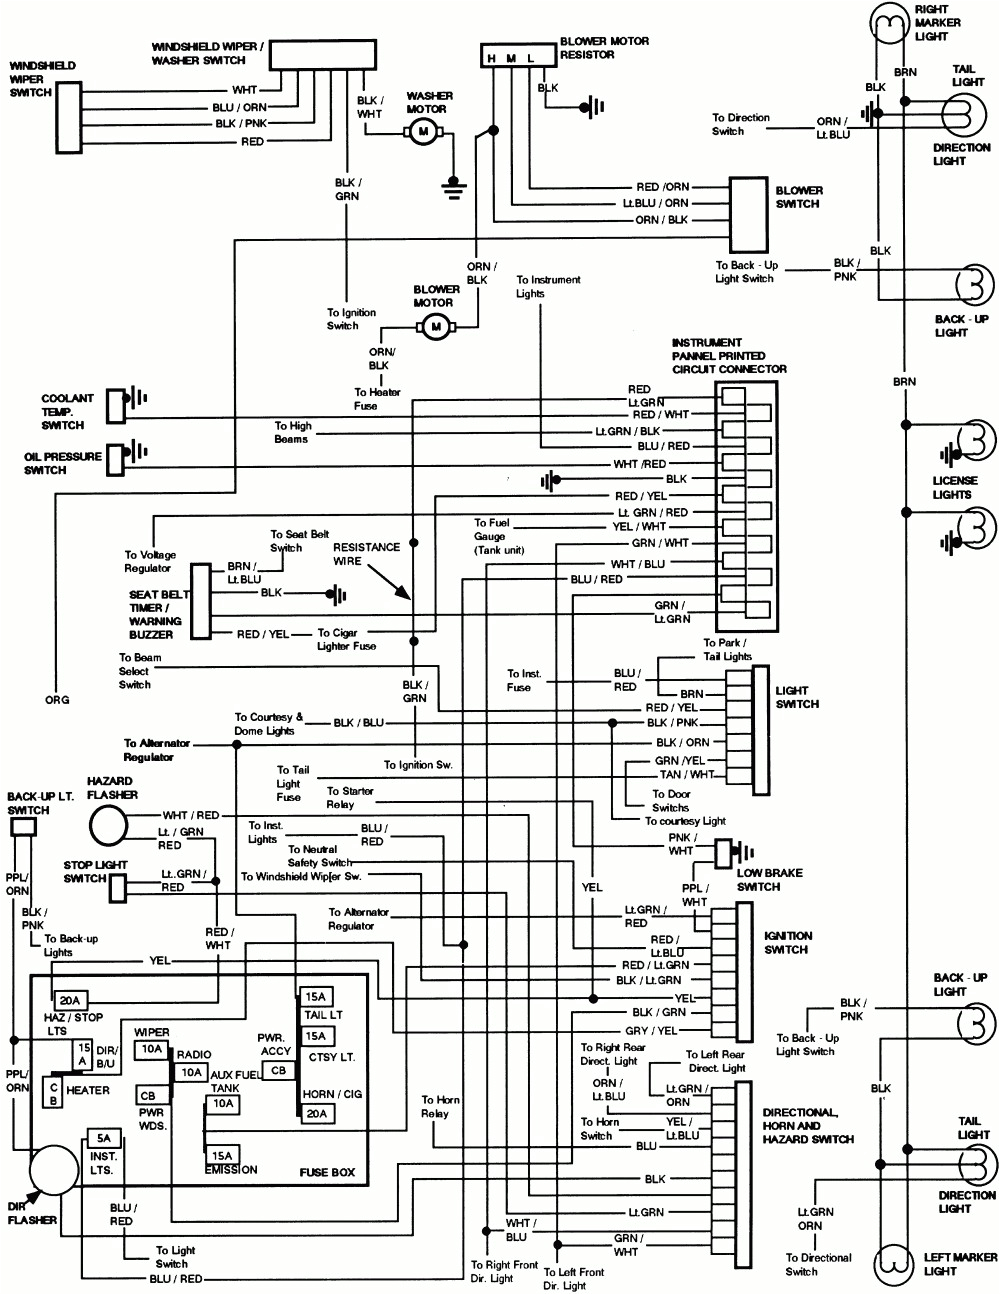 1989 ford f150 electrical diagram wiring diagram expert 1988 ford f 150 wiring wiring diagram for